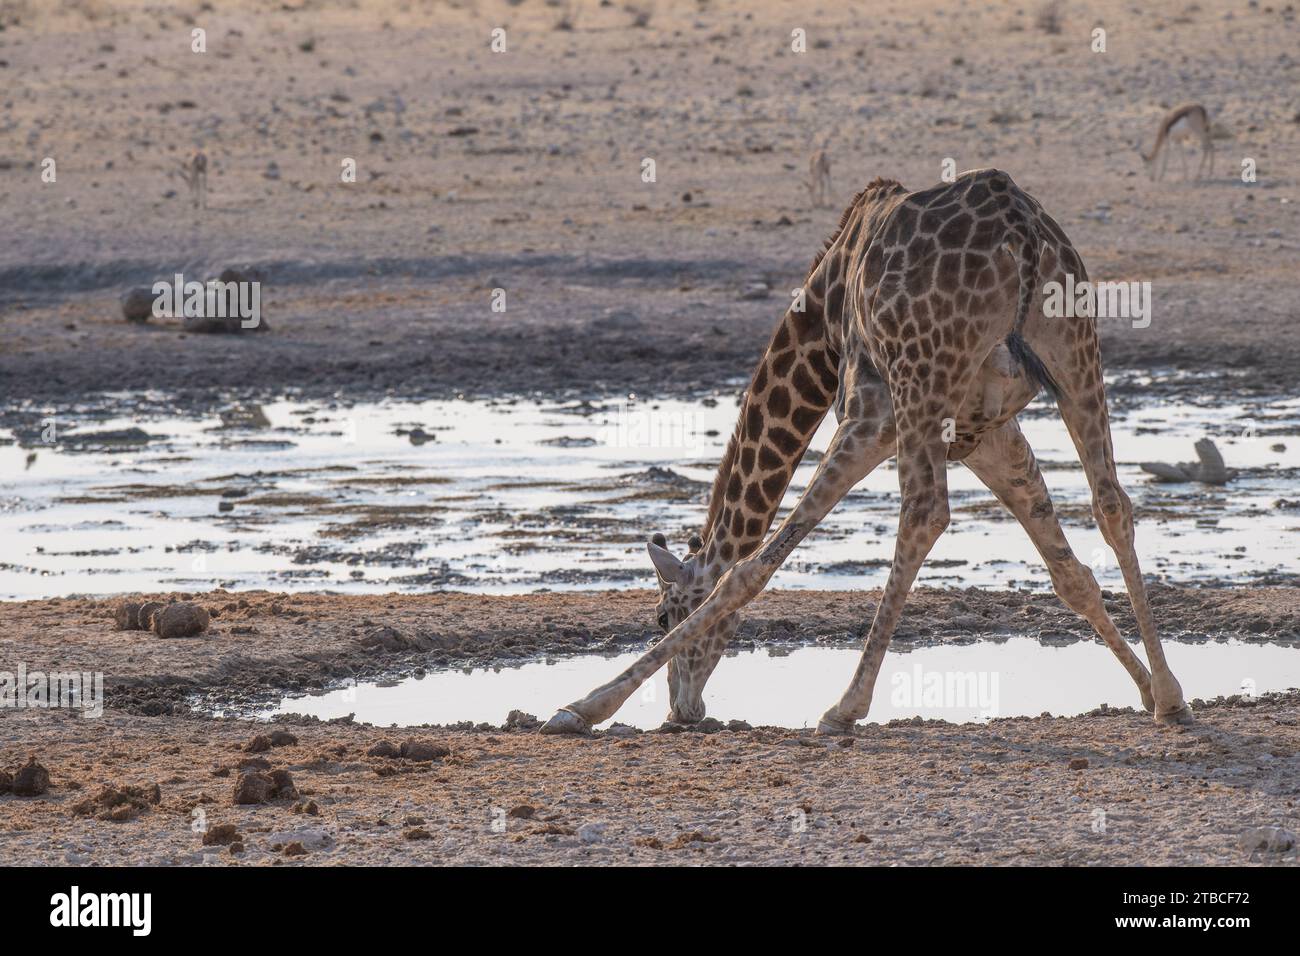 Angolan Giraffe, Giraffa cameloleopardis angolana, Giraffidae, Etosha Nationa Park, Namibia, Africa Stock Photo